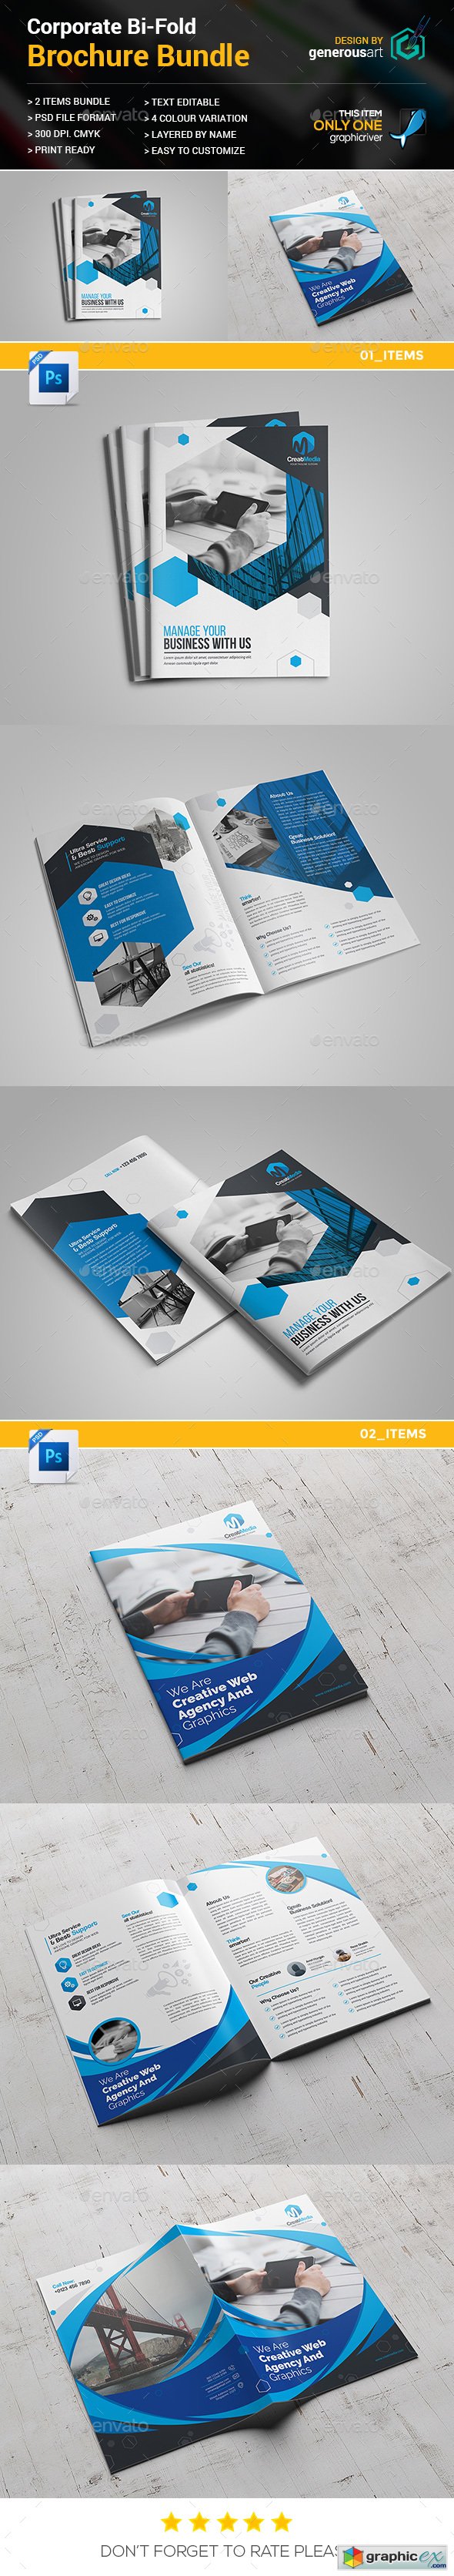 Business Bi-Fold Brochure Bundle 2 in 1